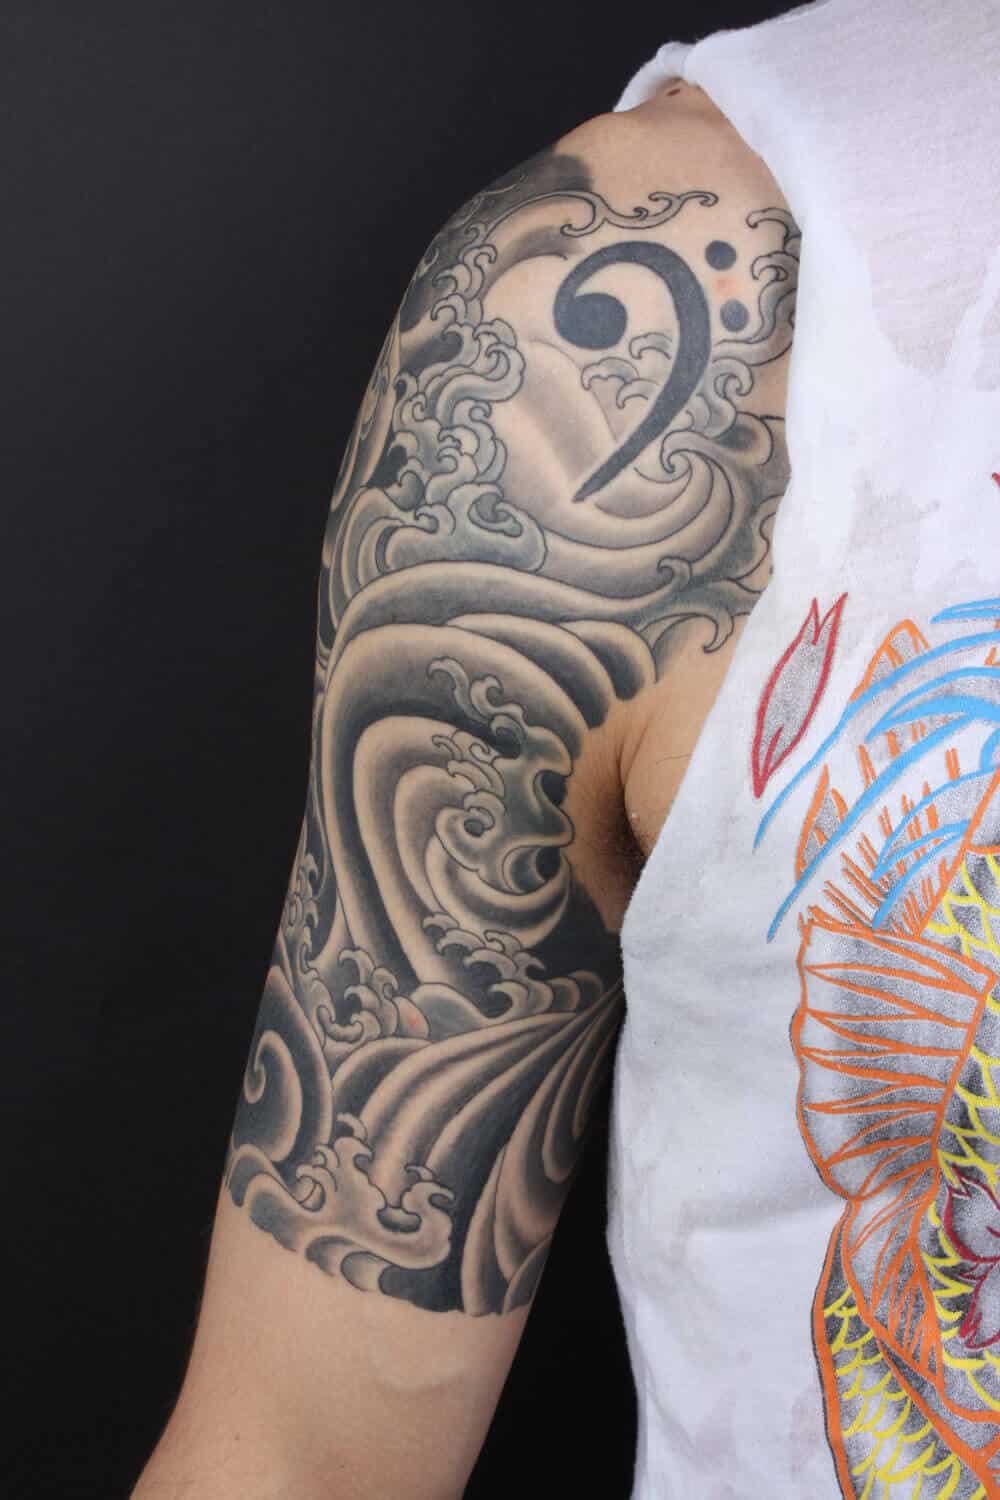 100 Ocean Tattoo Ideas: How Ocean Tattoos are Making a Splash